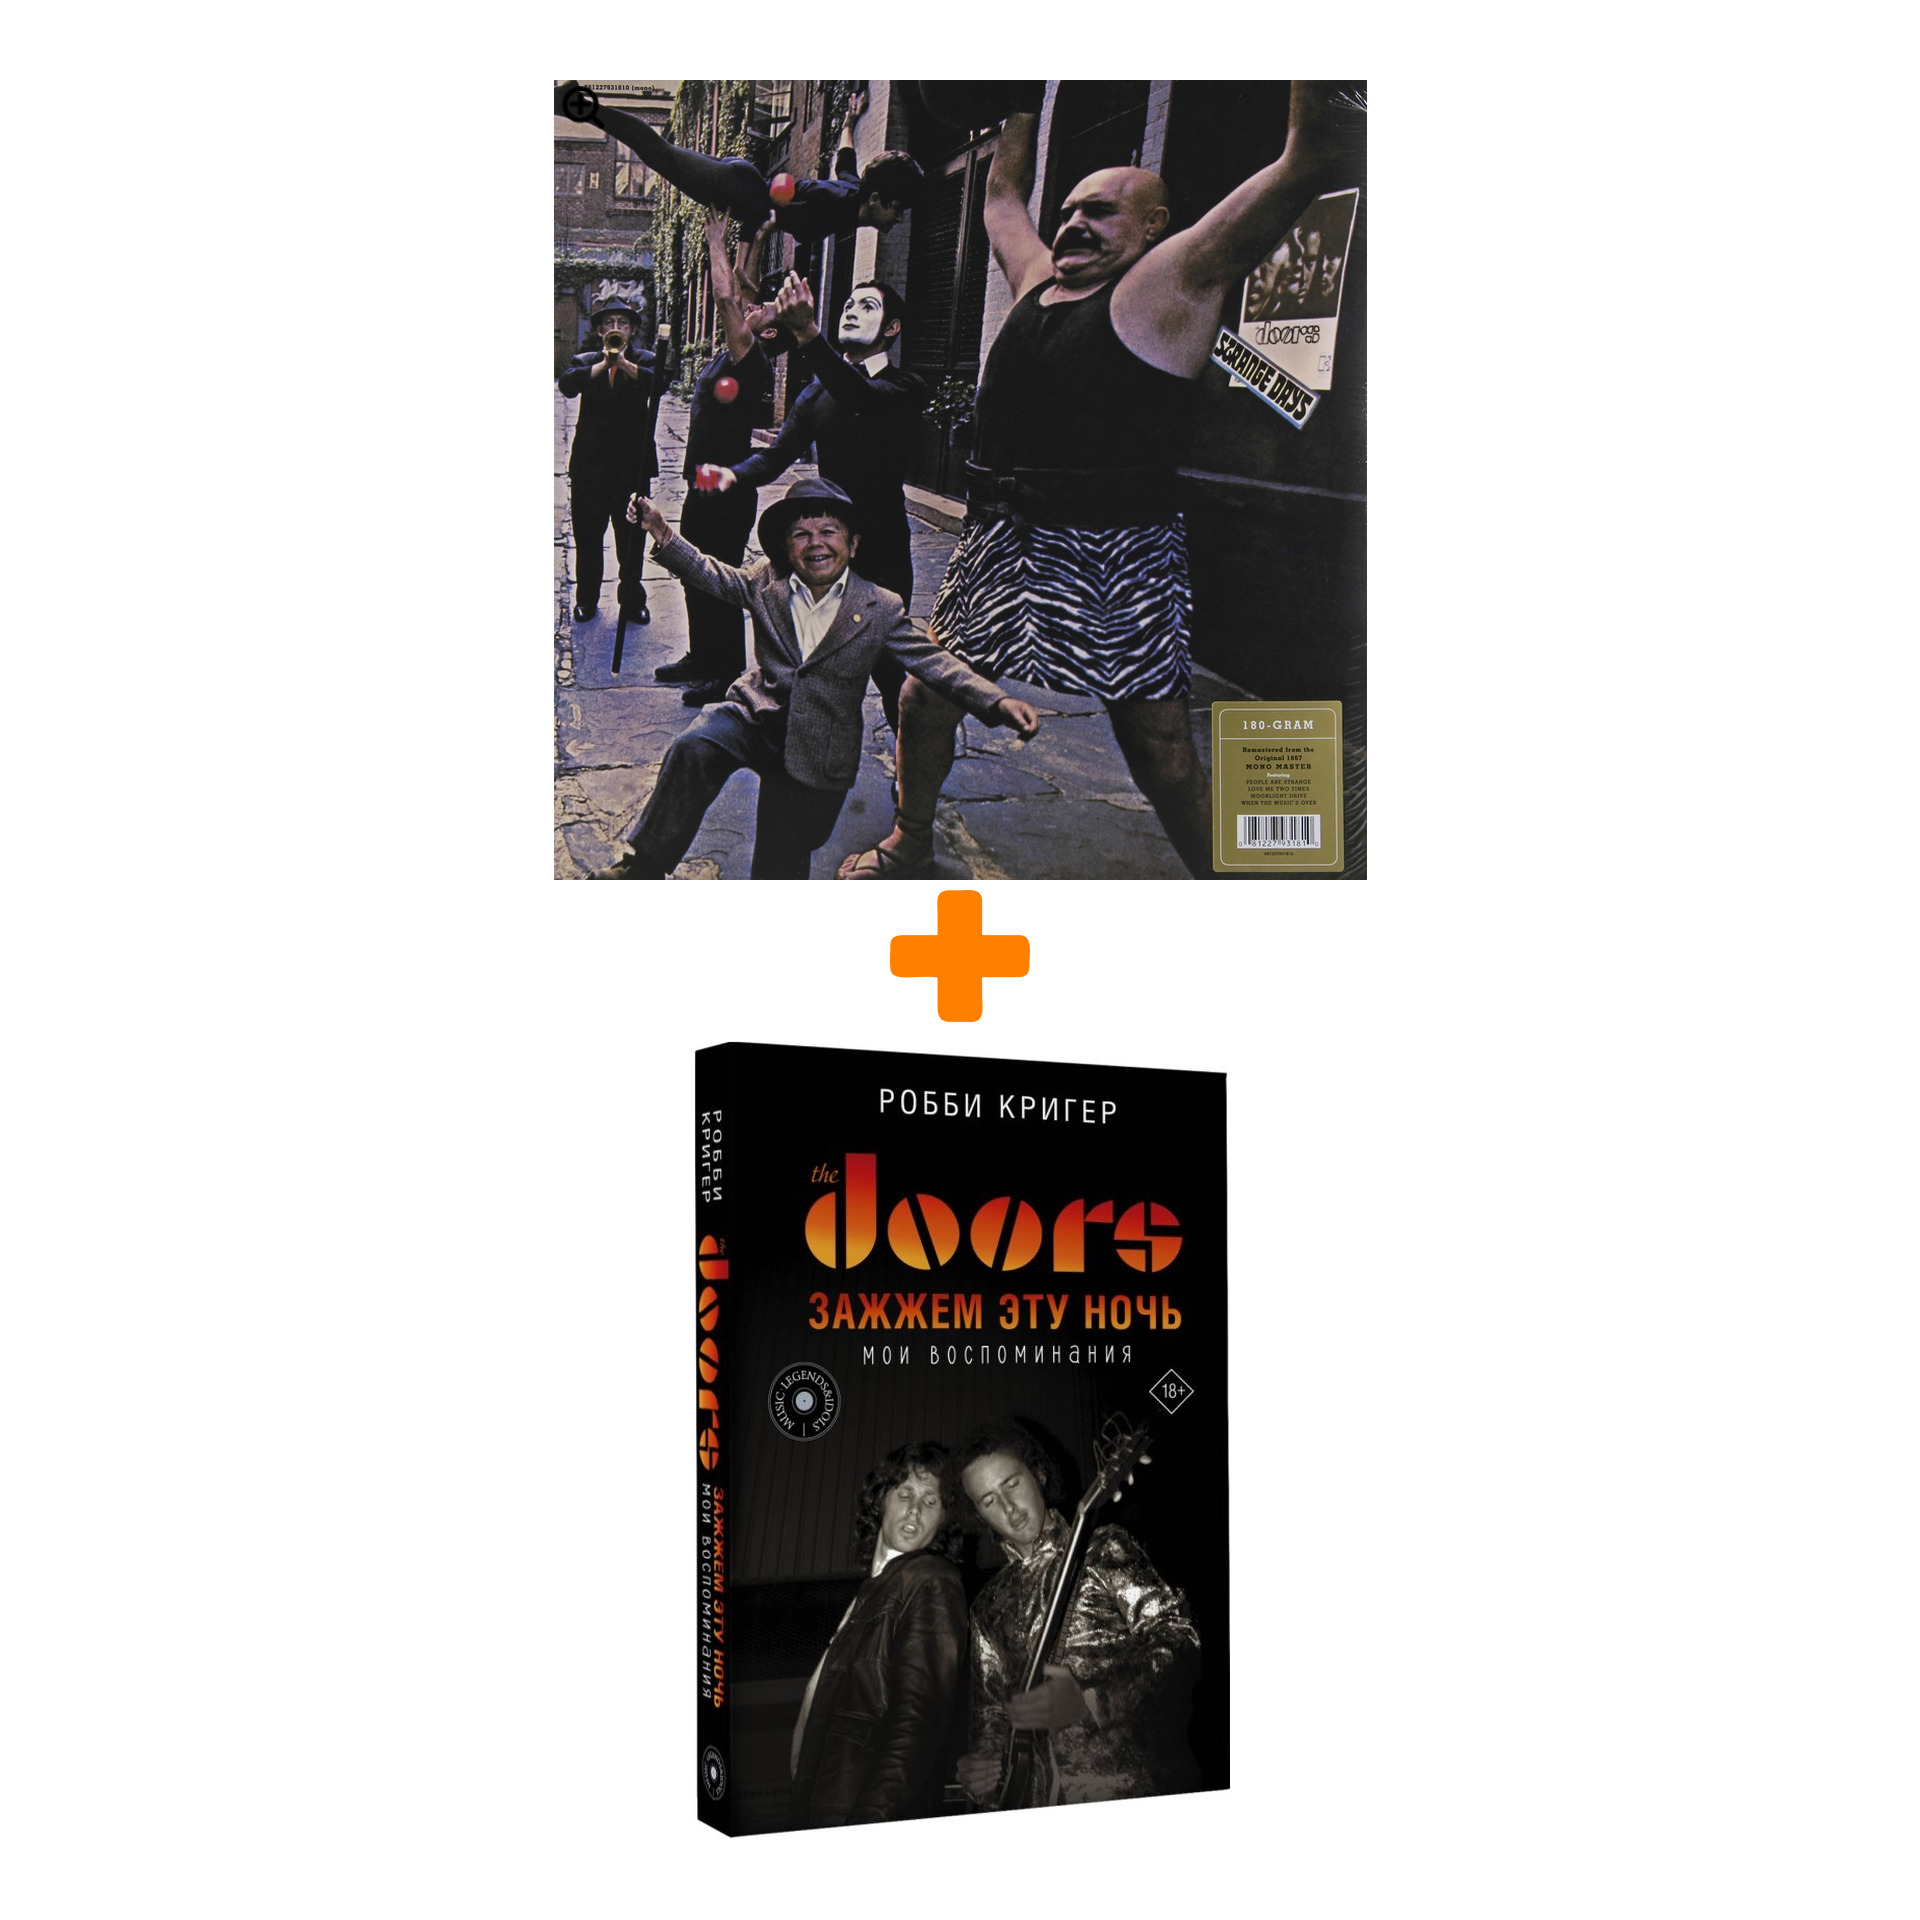 Комплект The Doors: книга Зажжем эту ночь + винил Strange Days 50th Anniversary LP цена и фото